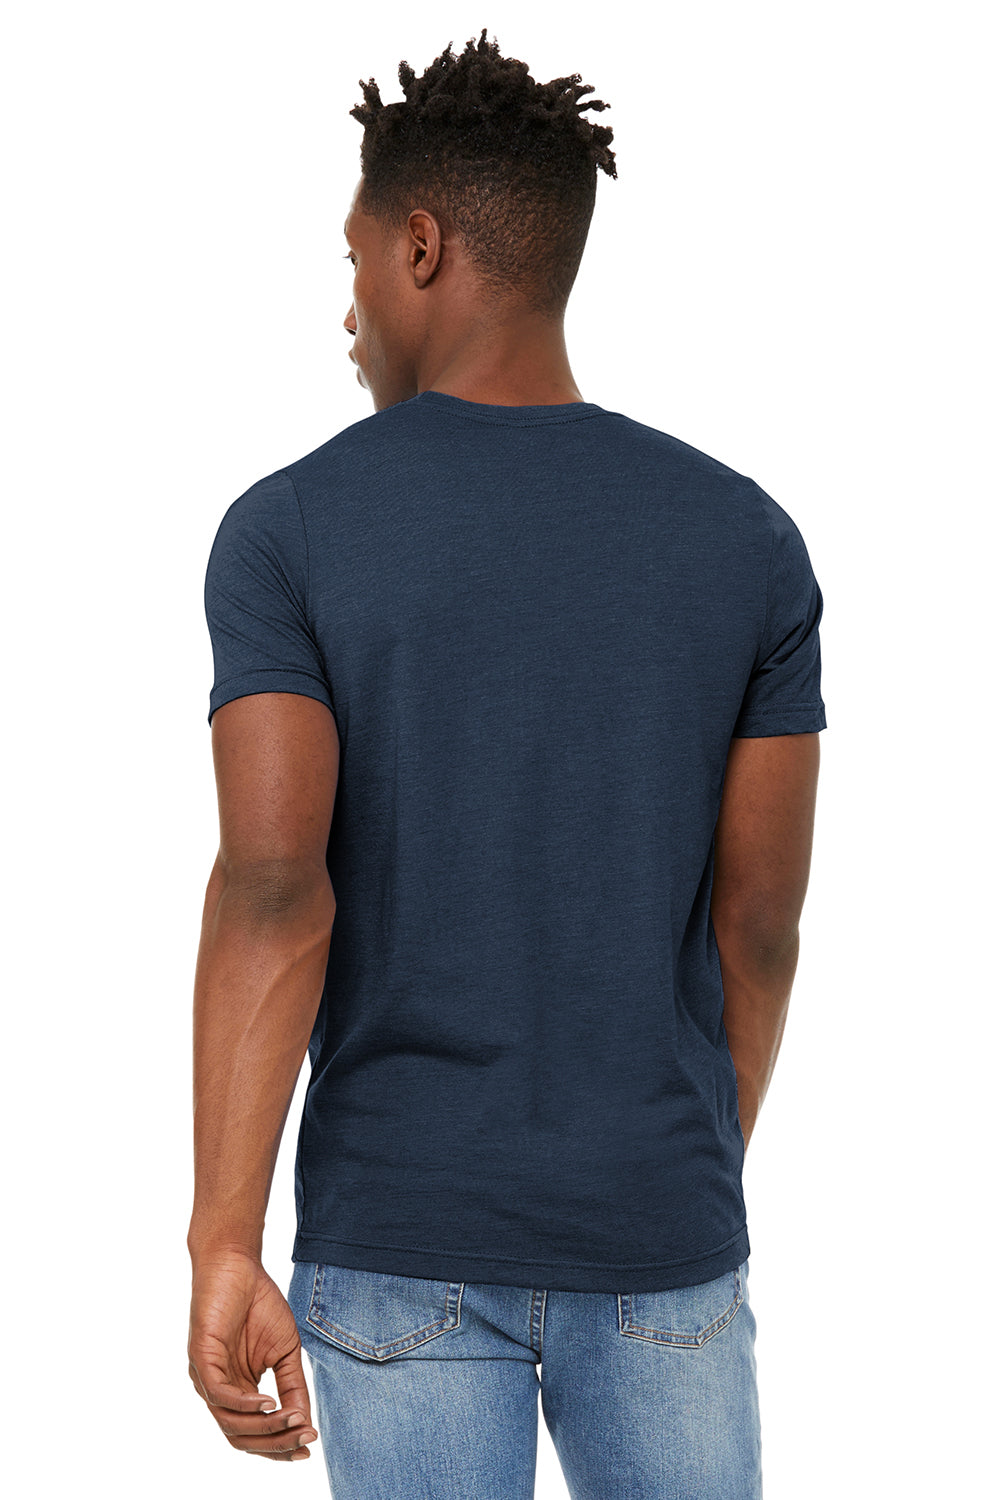 Bella + Canvas BC3301/3301C/3301 Mens Jersey Short Sleeve Crewneck T-Shirt Heather Navy Blue Model Back